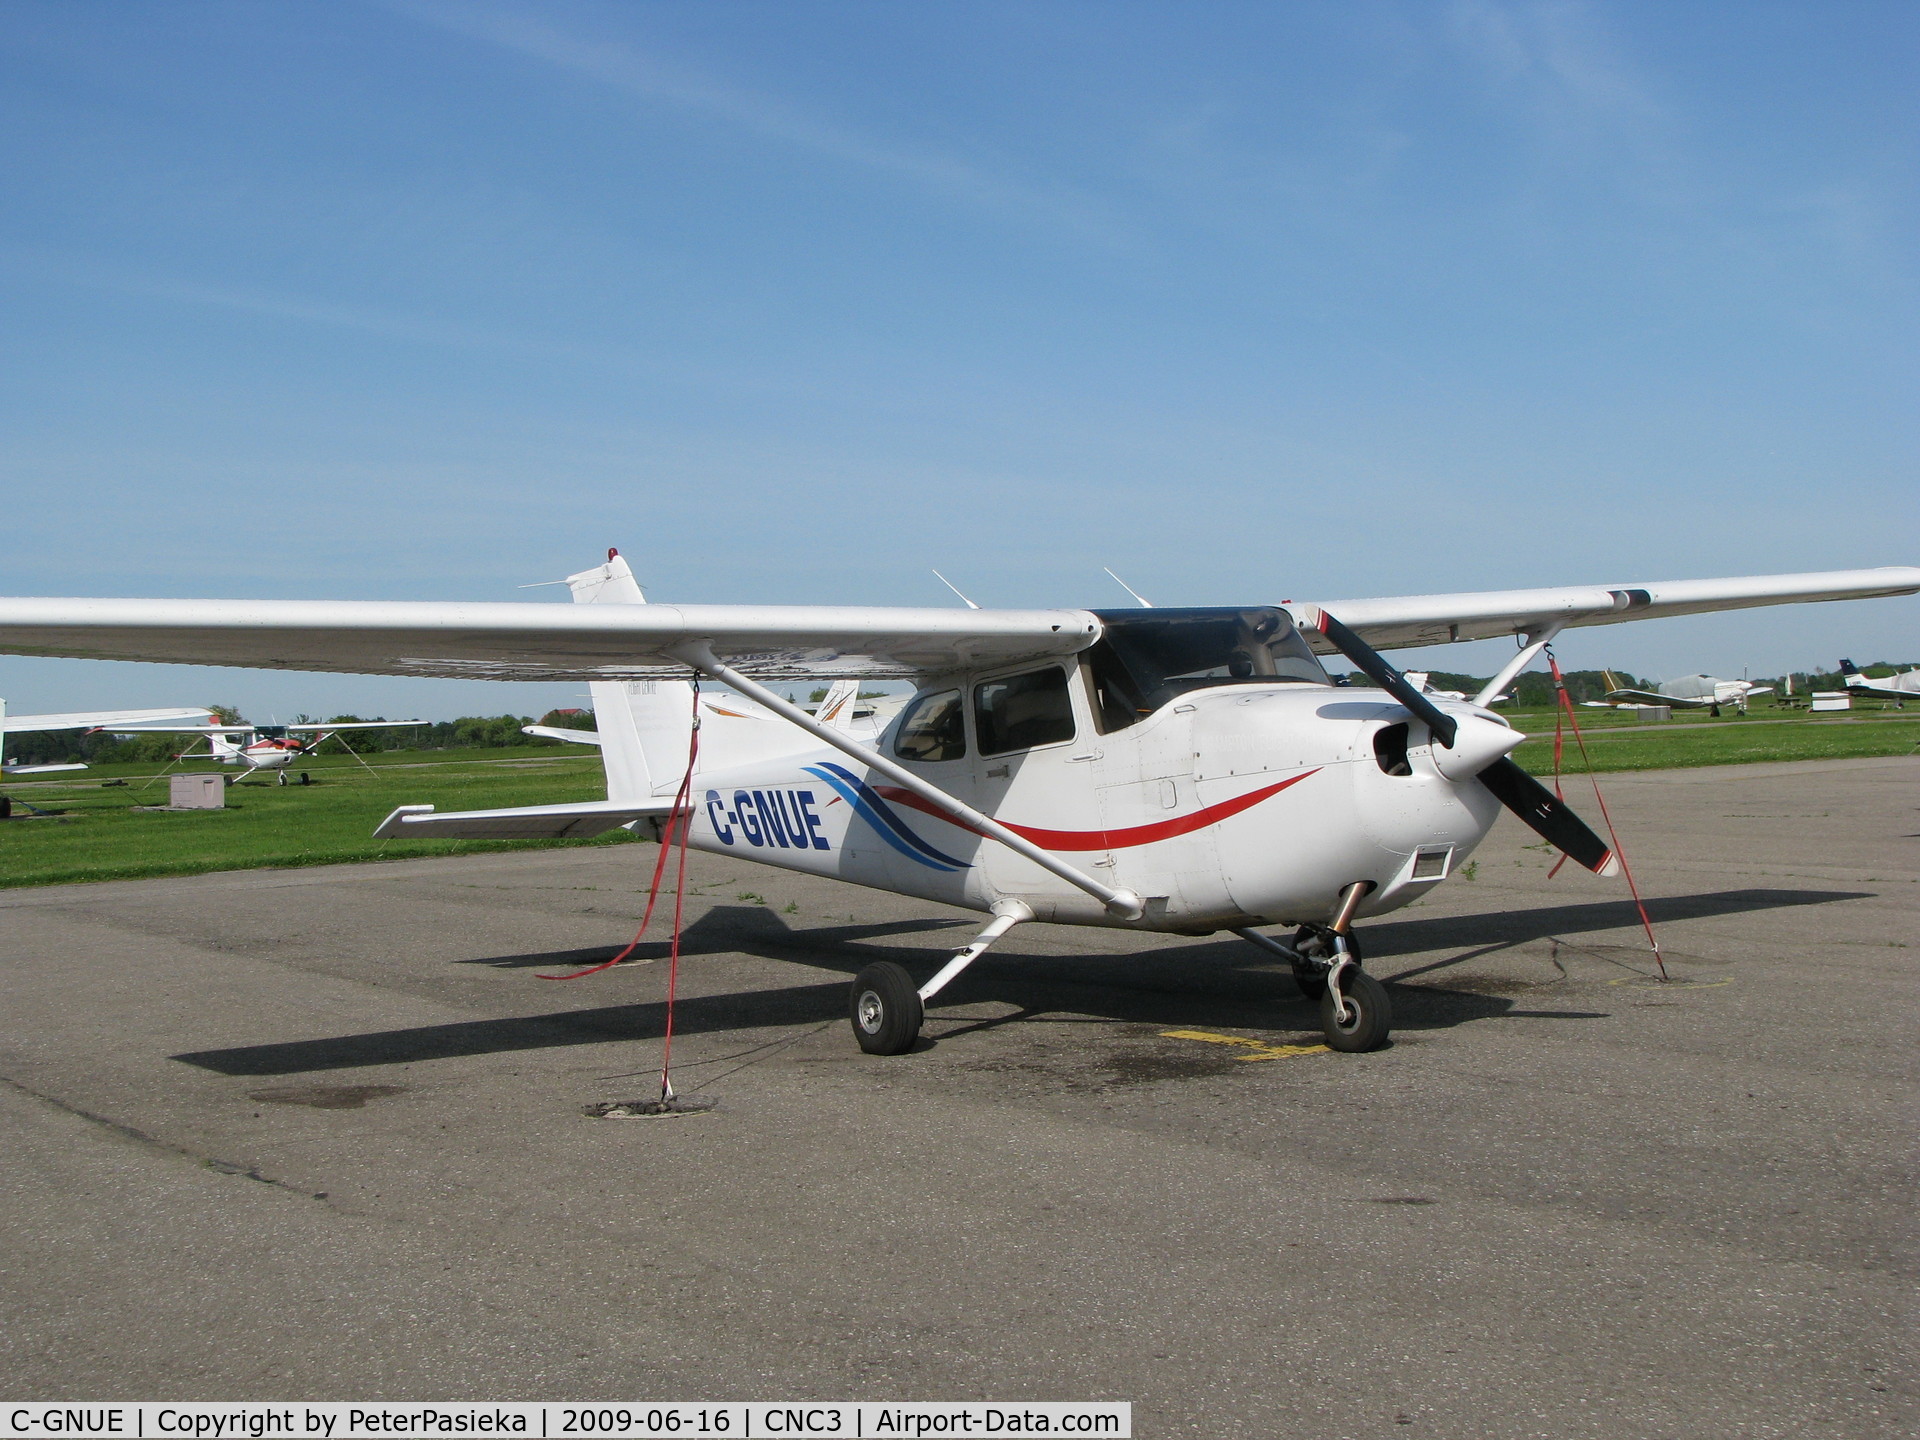 C-GNUE, 1997 Cessna 172R C/N 17280025, @ Brampton Airport